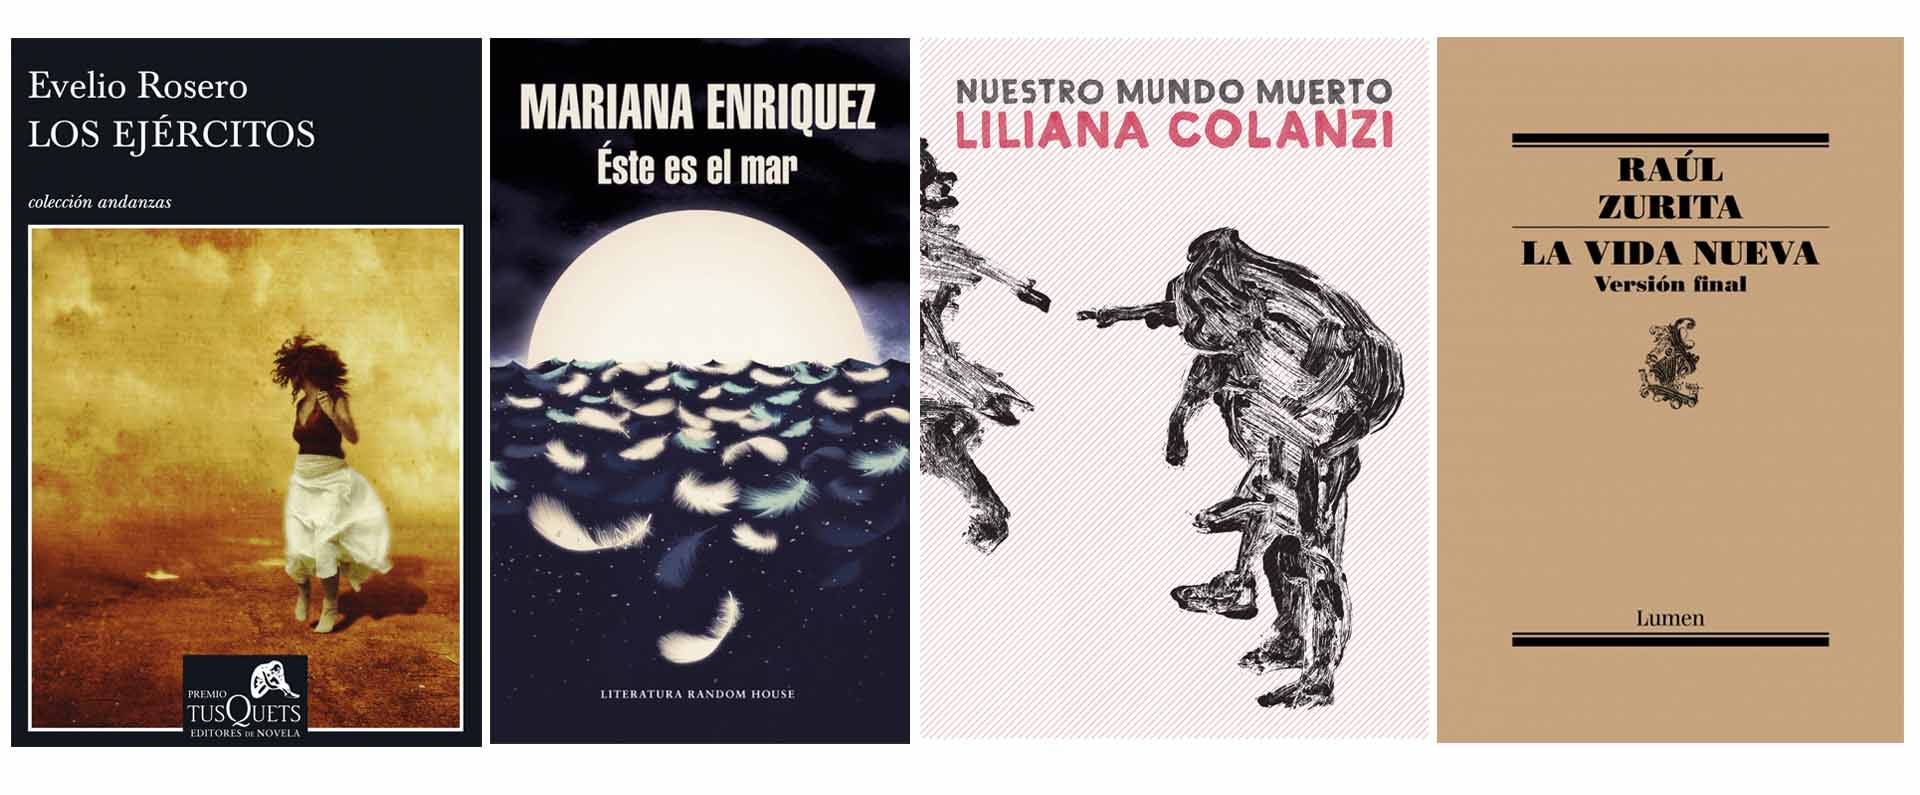 ¿Existe interés en España por leer autores latinoamericanos? 7